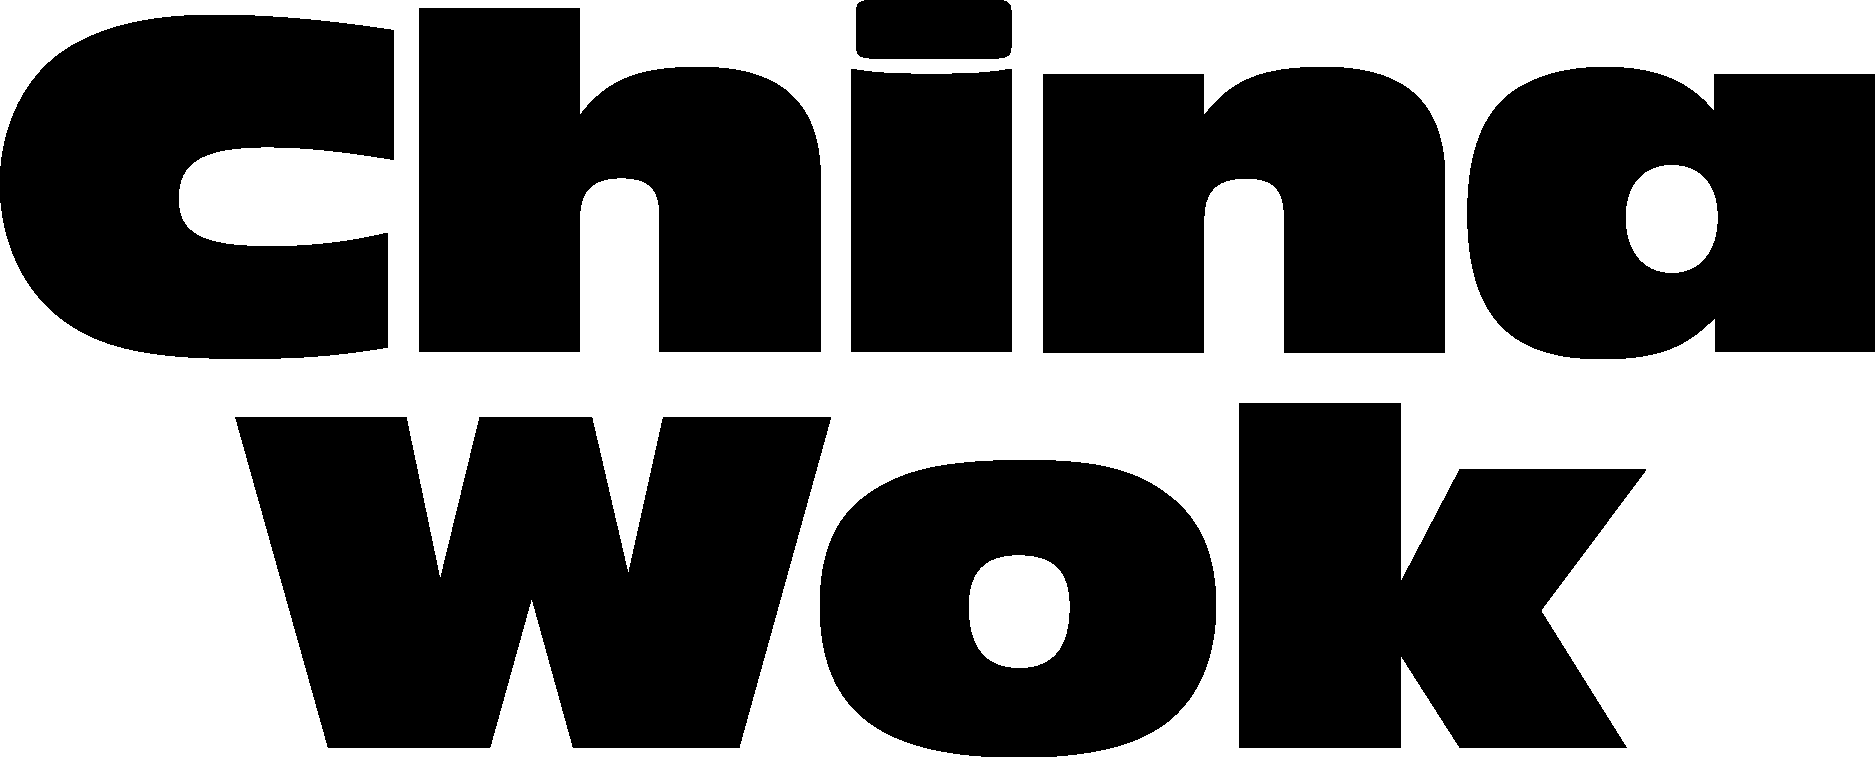 China Wok Black Logo Vector